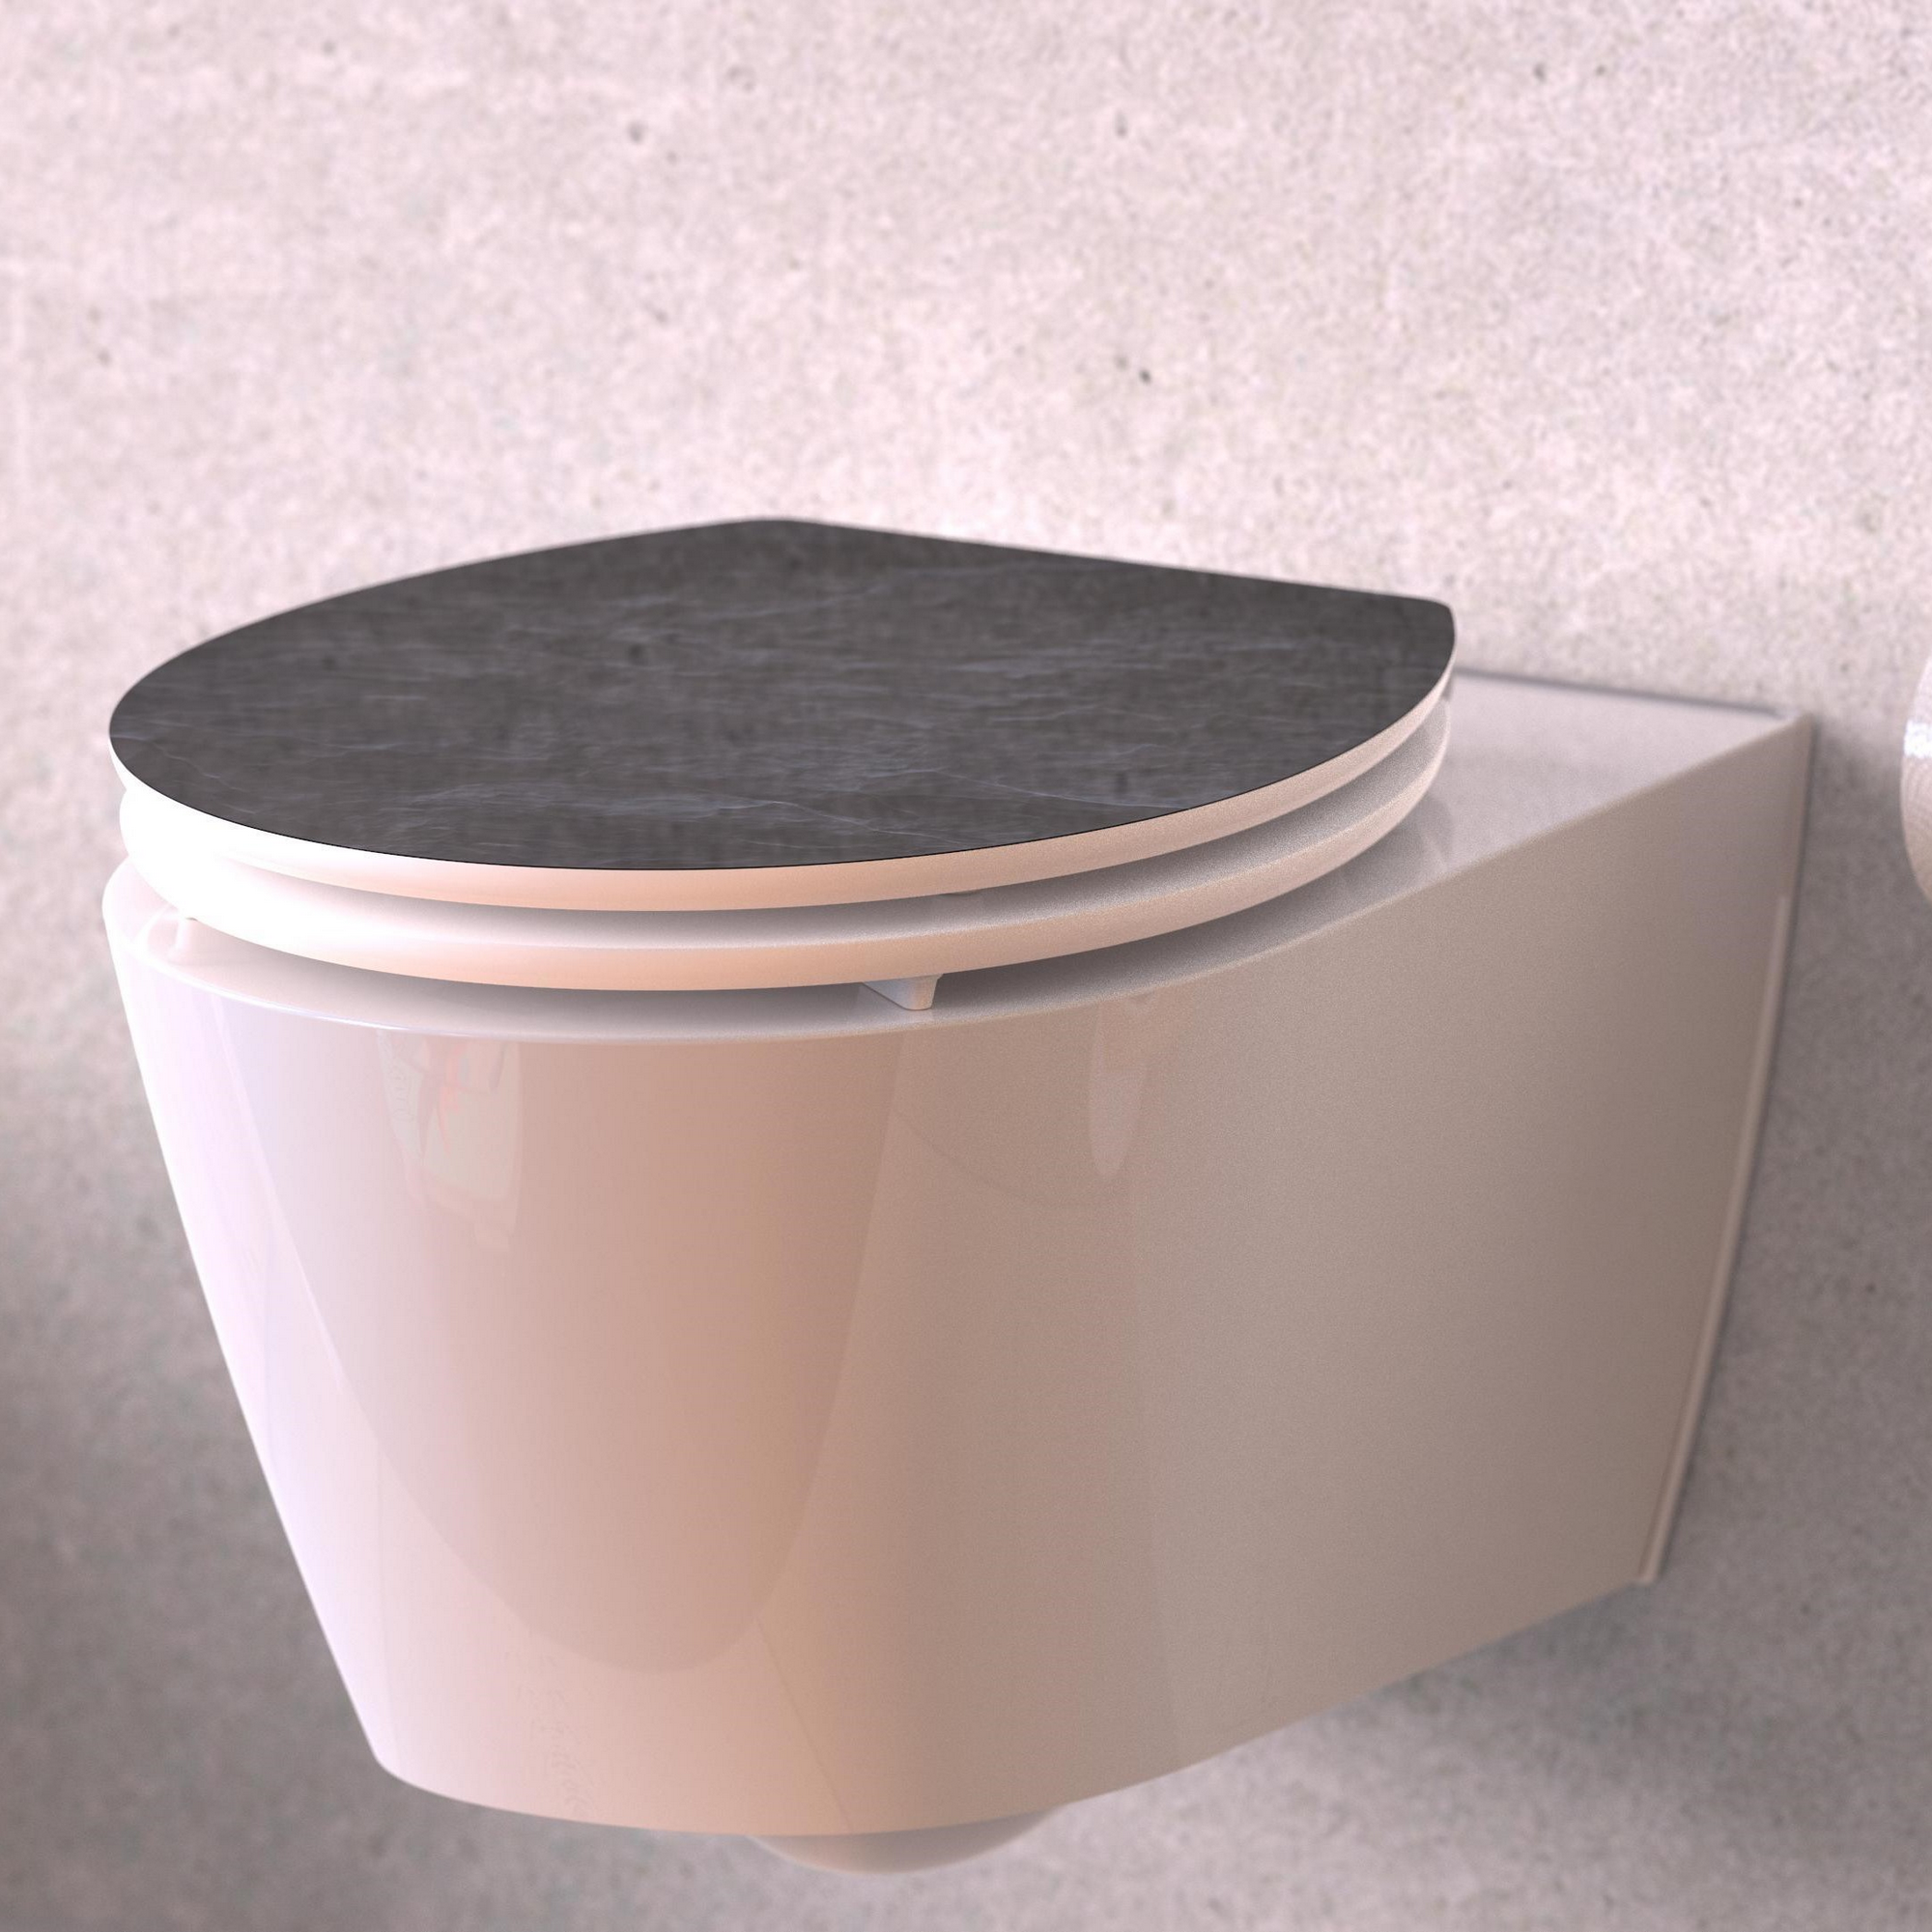 WC-Sitz 'Black Stone HG' mit Absenkautomatik schwarz 37 x 43 cm + product picture